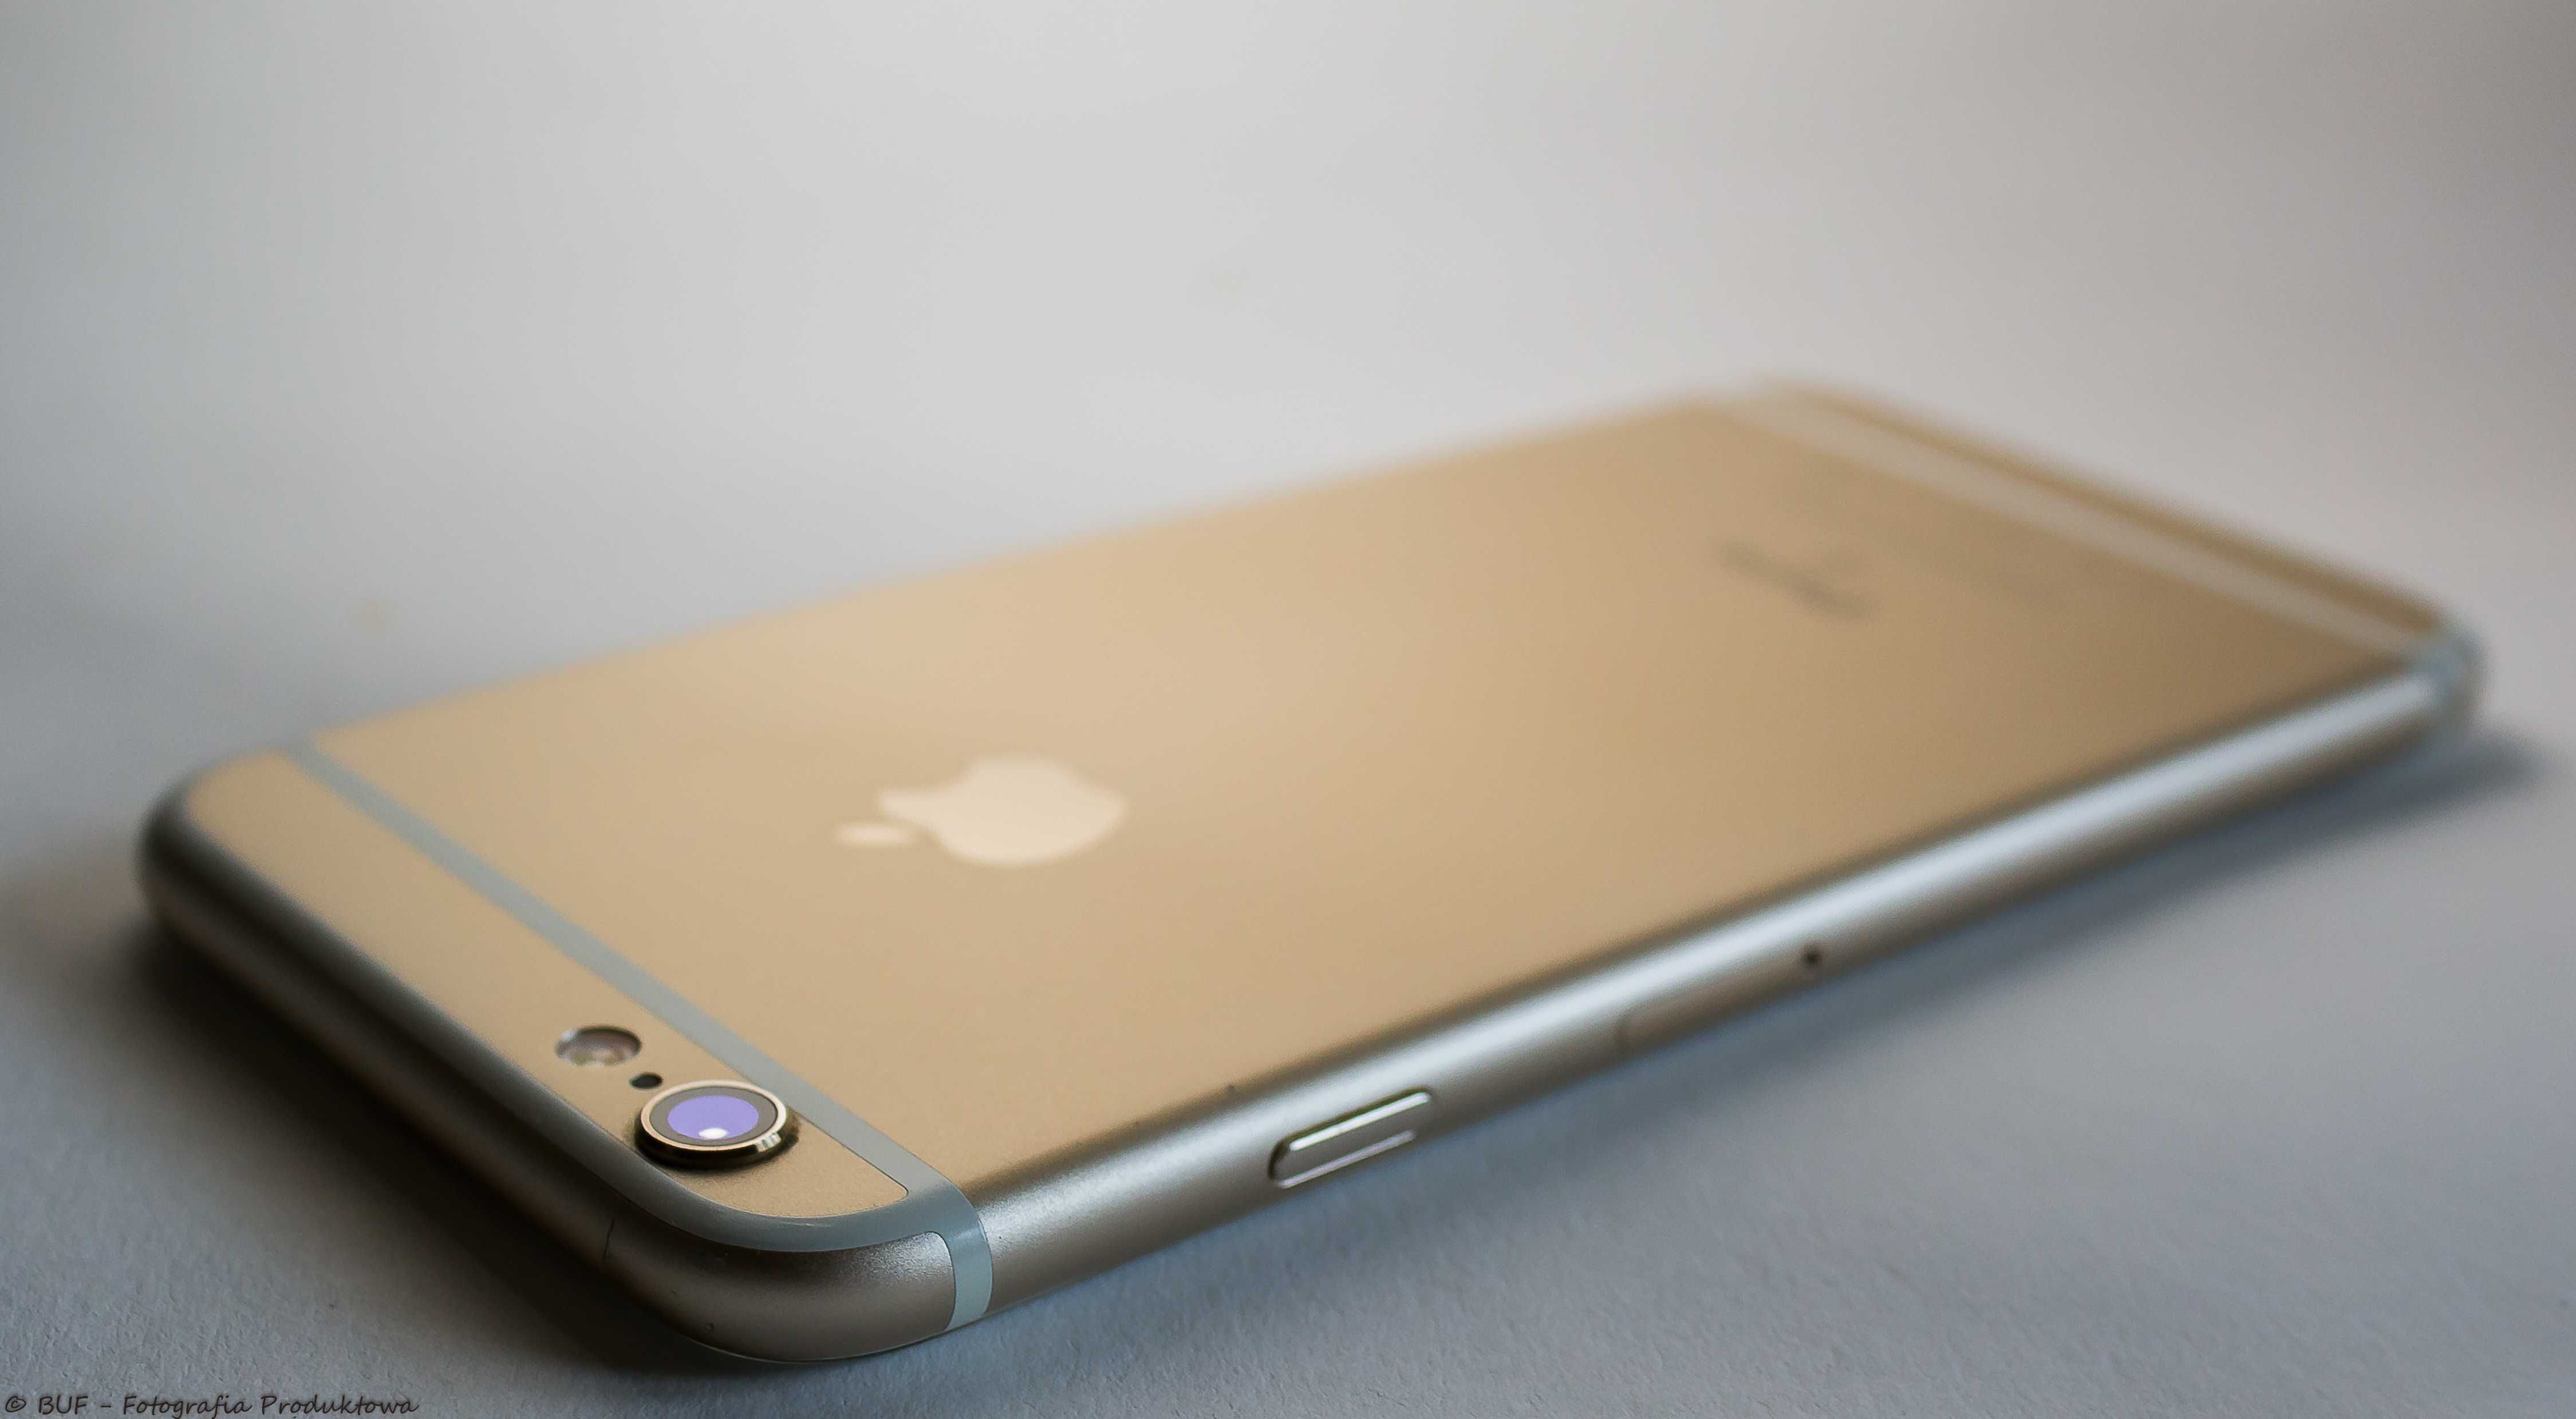 iPhone 6s White Mirror Złoty Biel 32GB iOs 15.8.2 Gold Limited 100%Bat